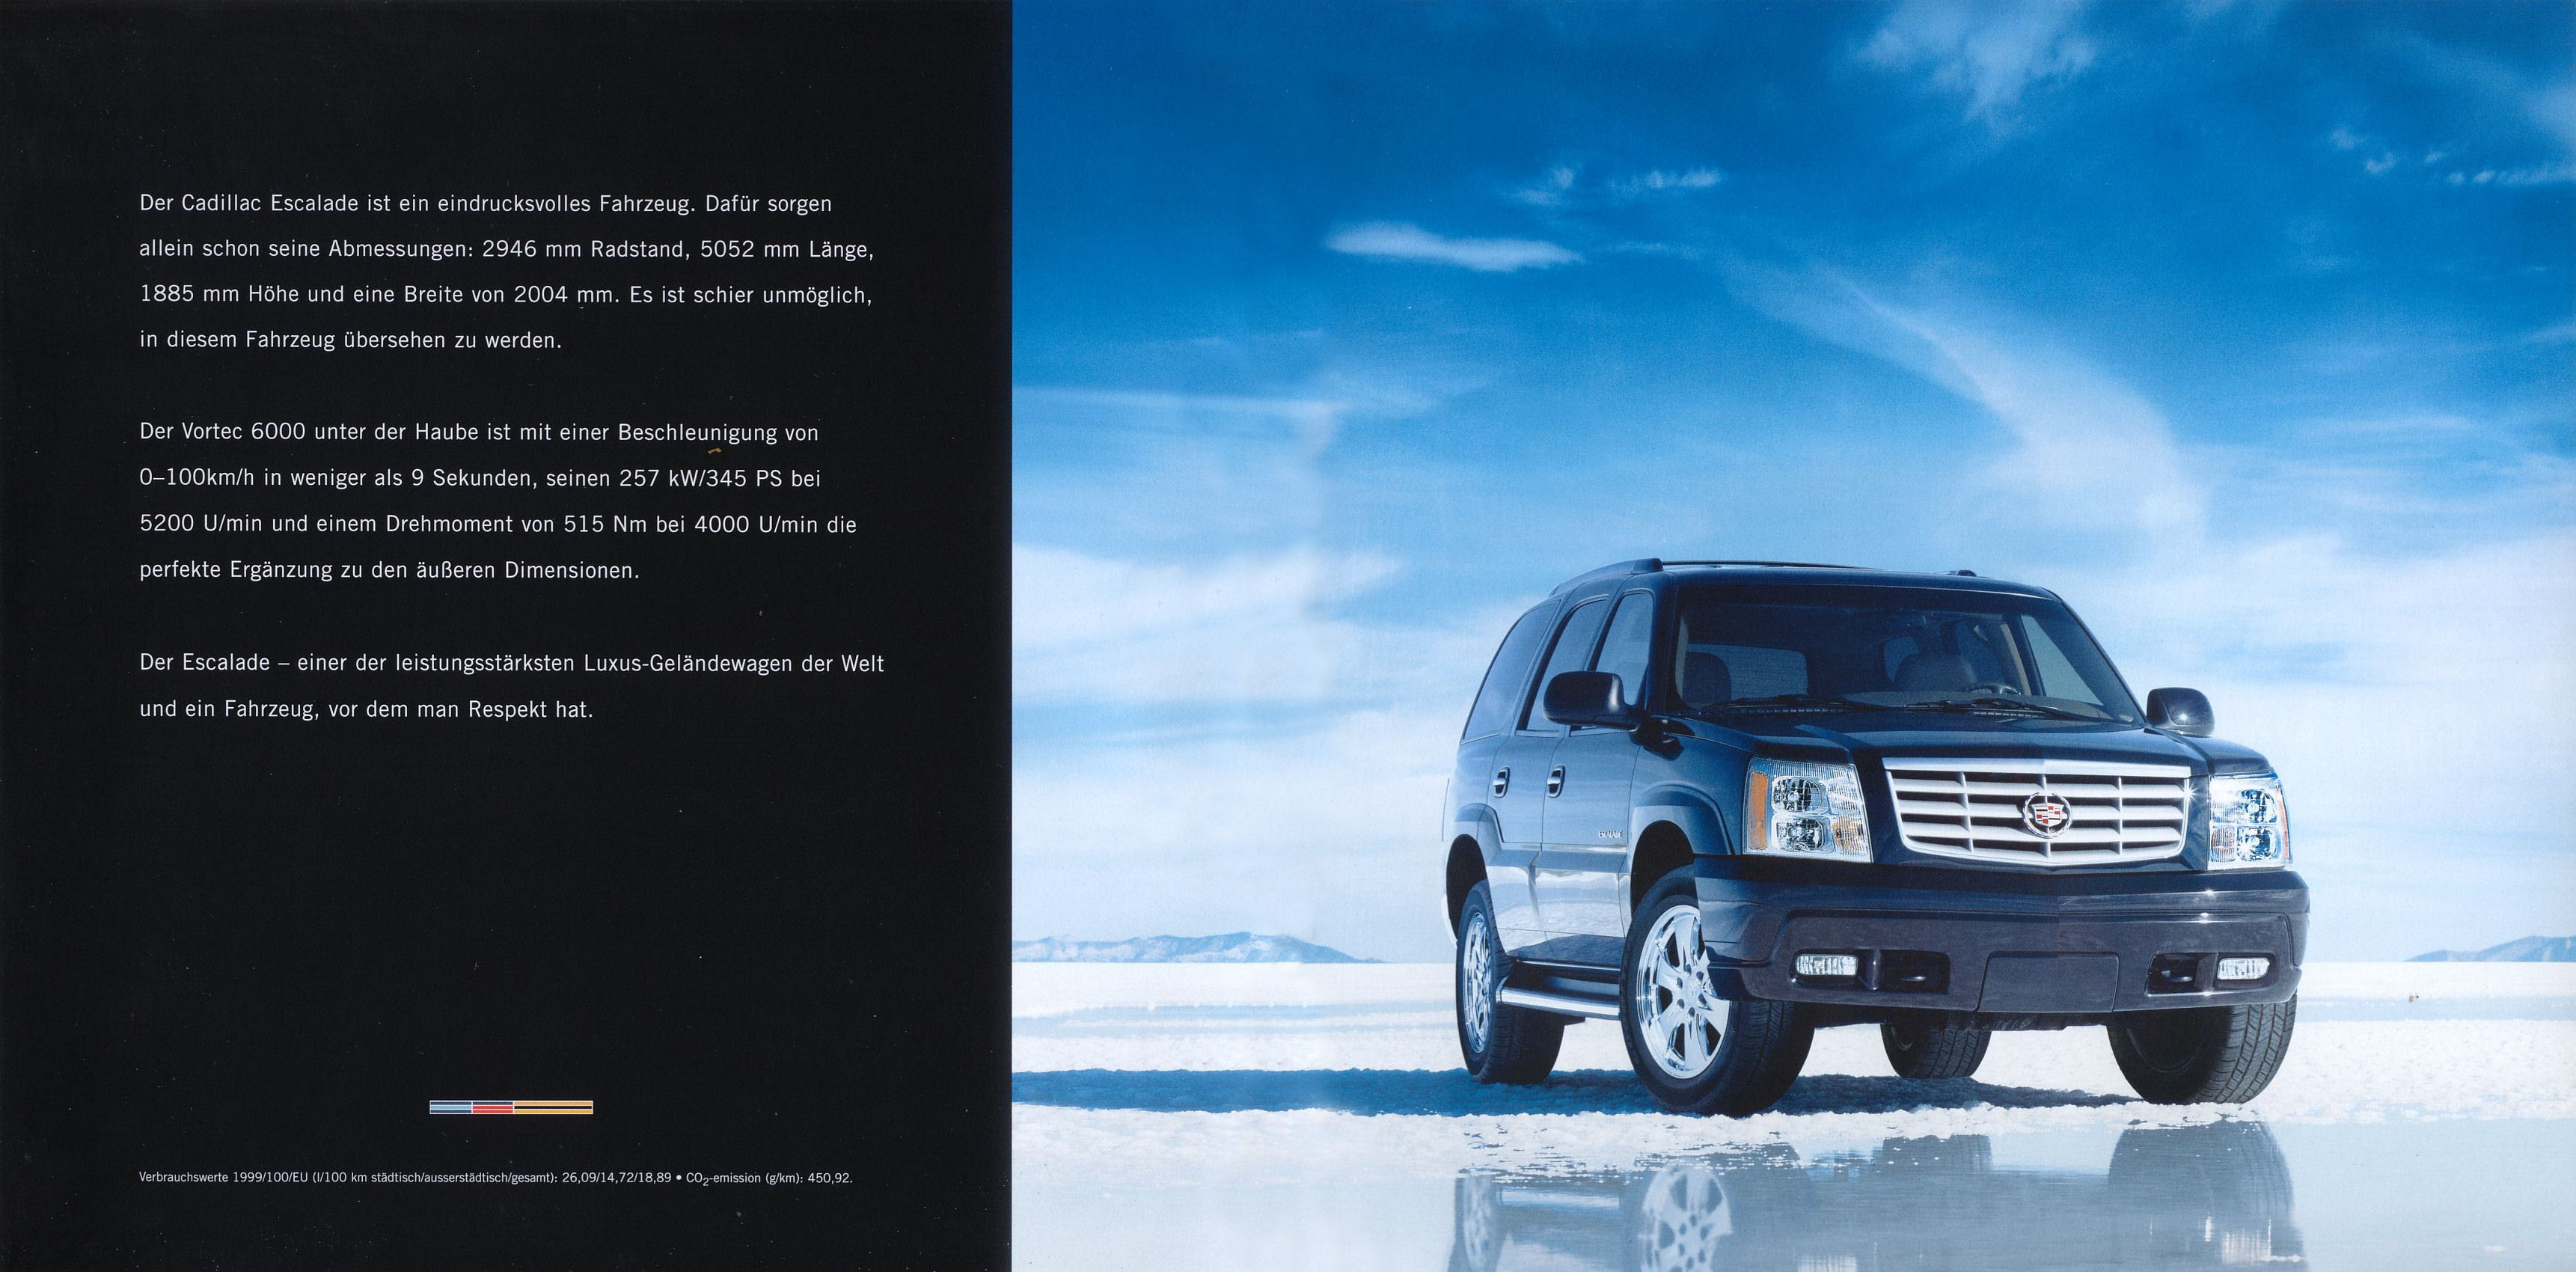 Cadillac Escalade brochure